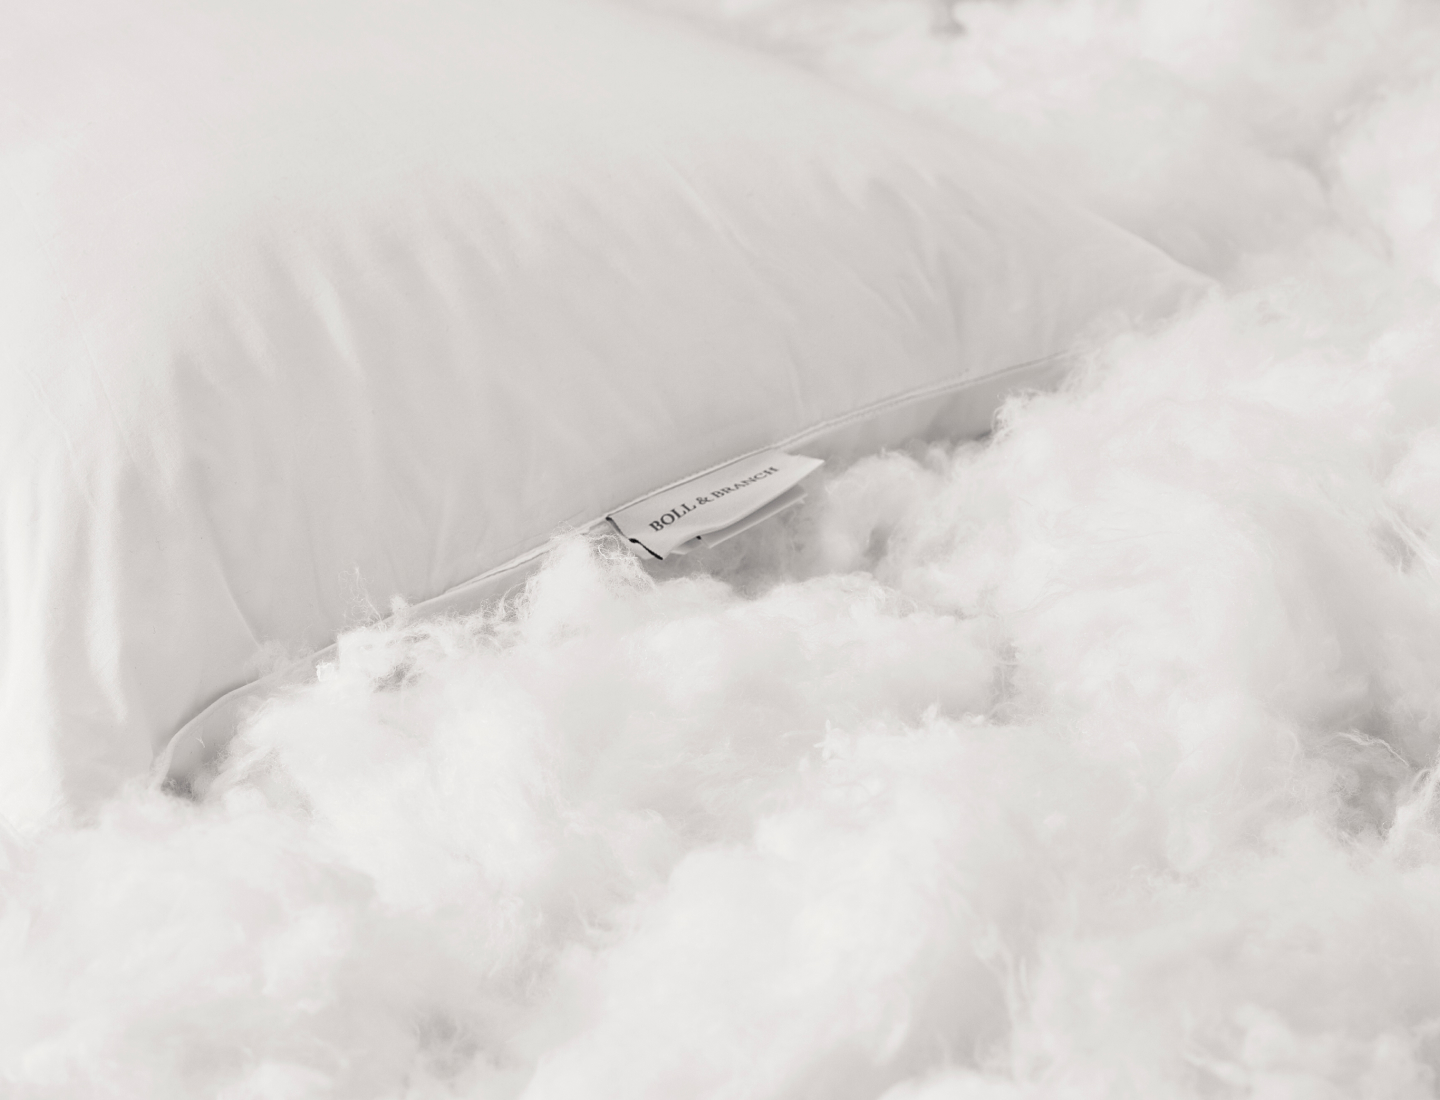 Boll & Branch Down Alternative Organic Cotton Accent Pillow in White